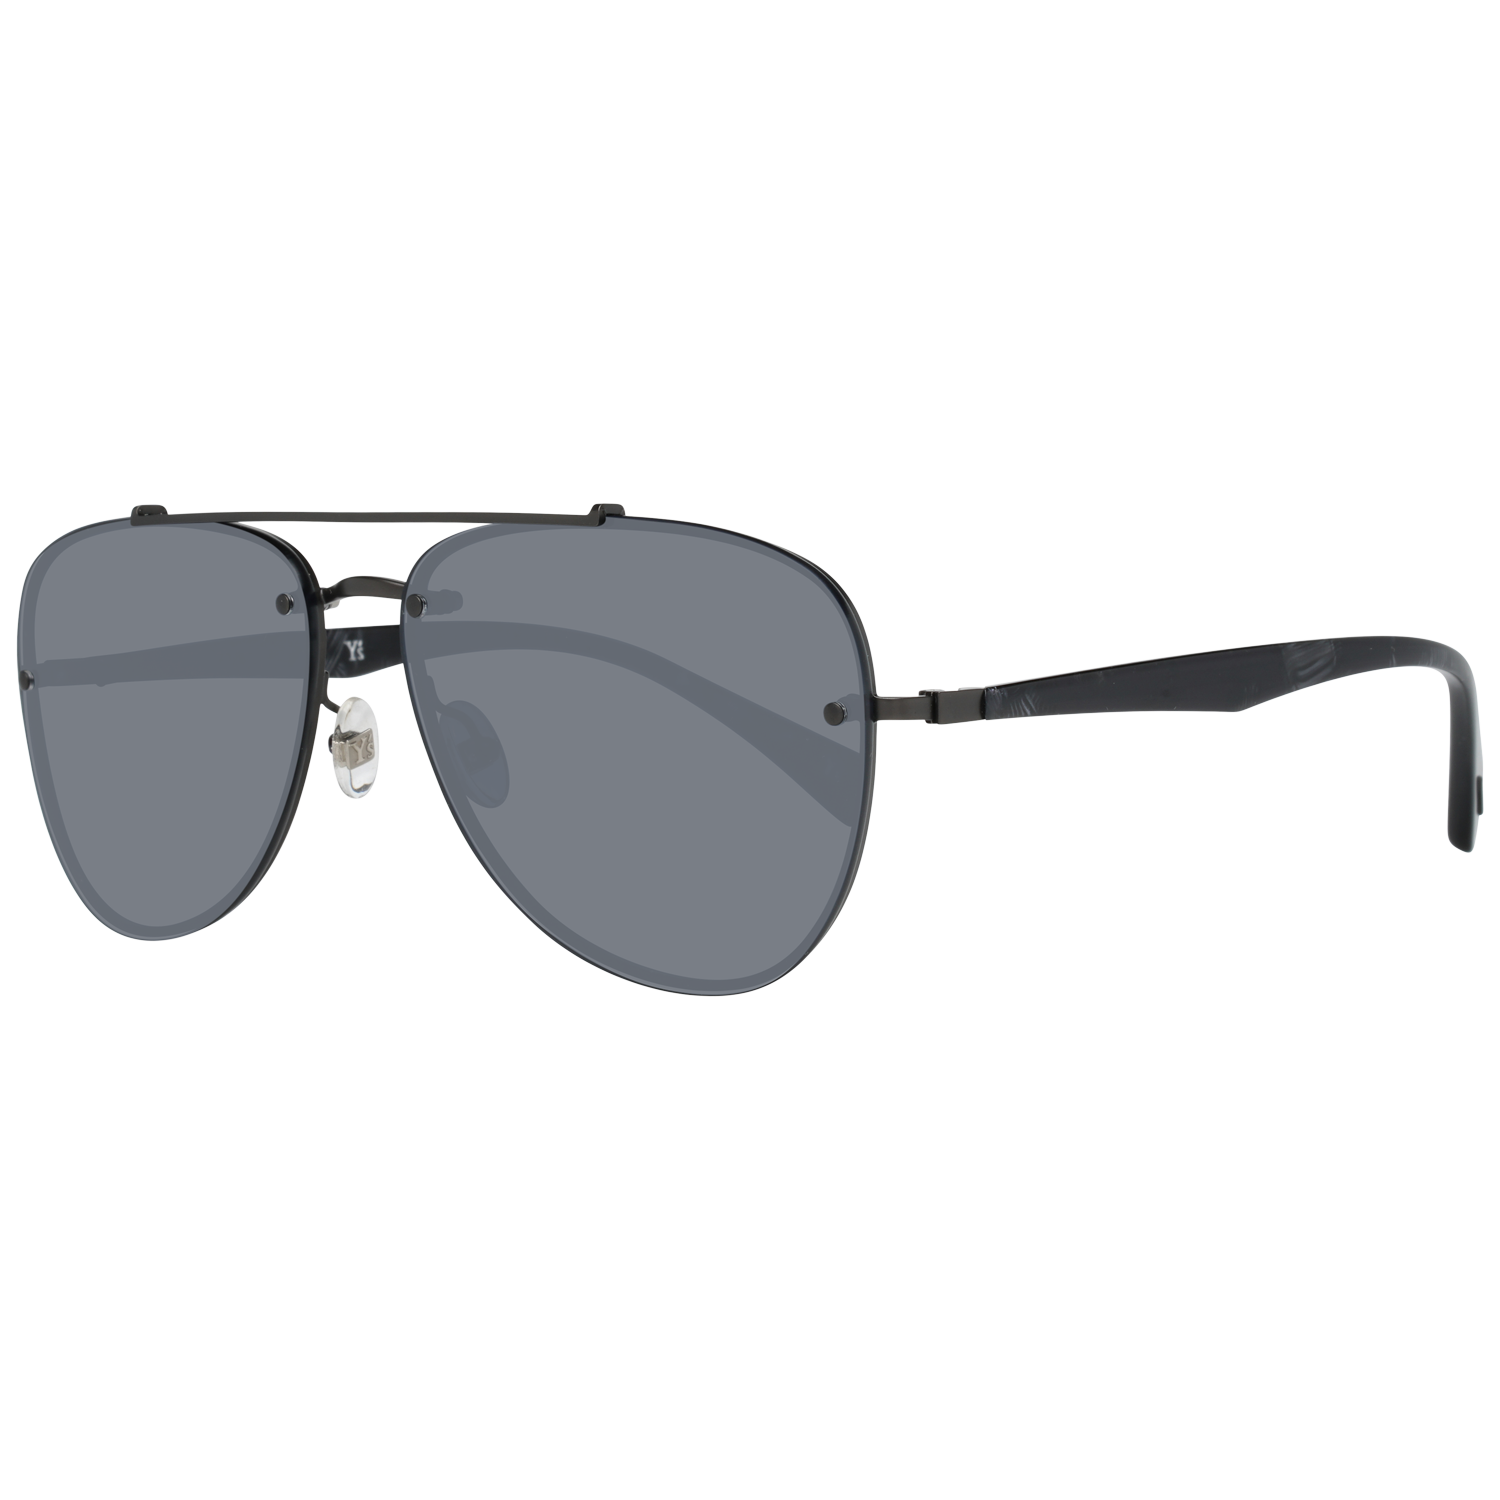 Yohji Yamamoto Sunglasses YS7004 901 61 Grey